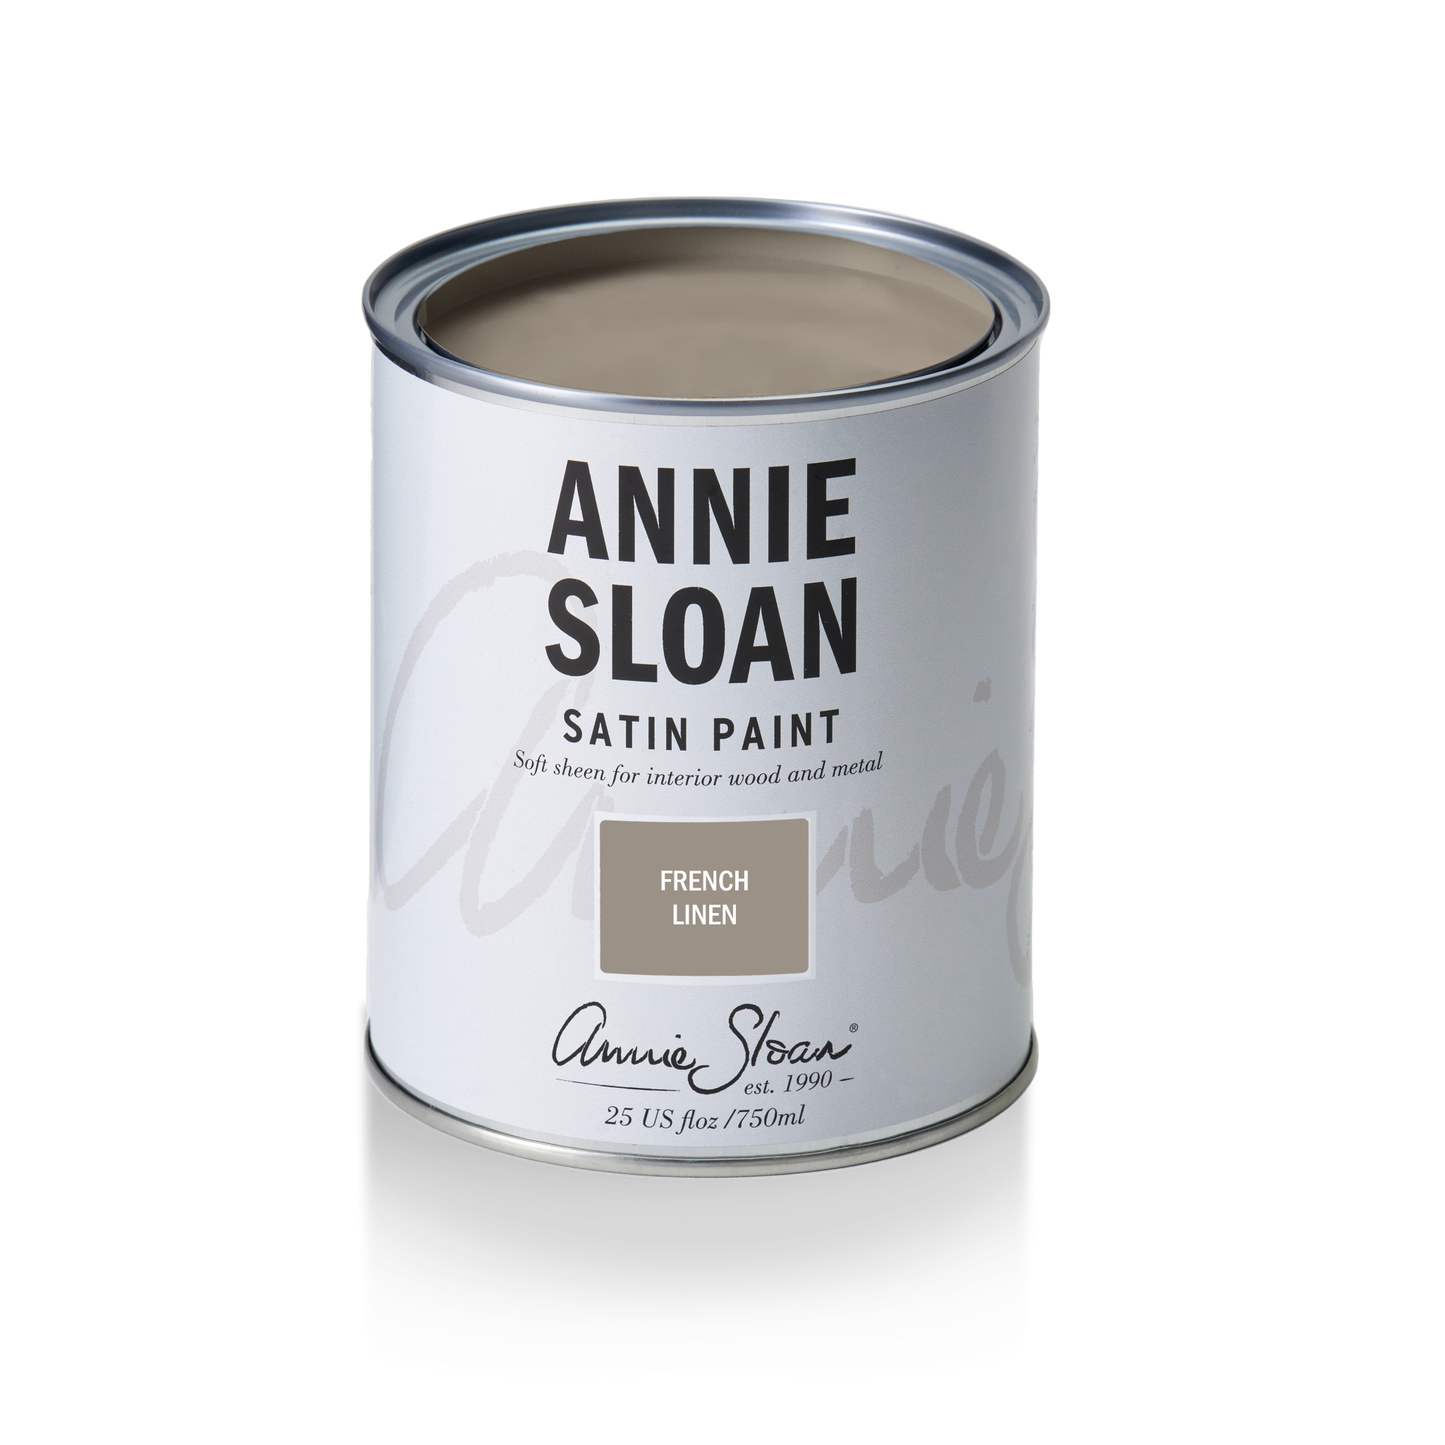 Annie Sloan Satin Paint French Linen, 750 ml Tin